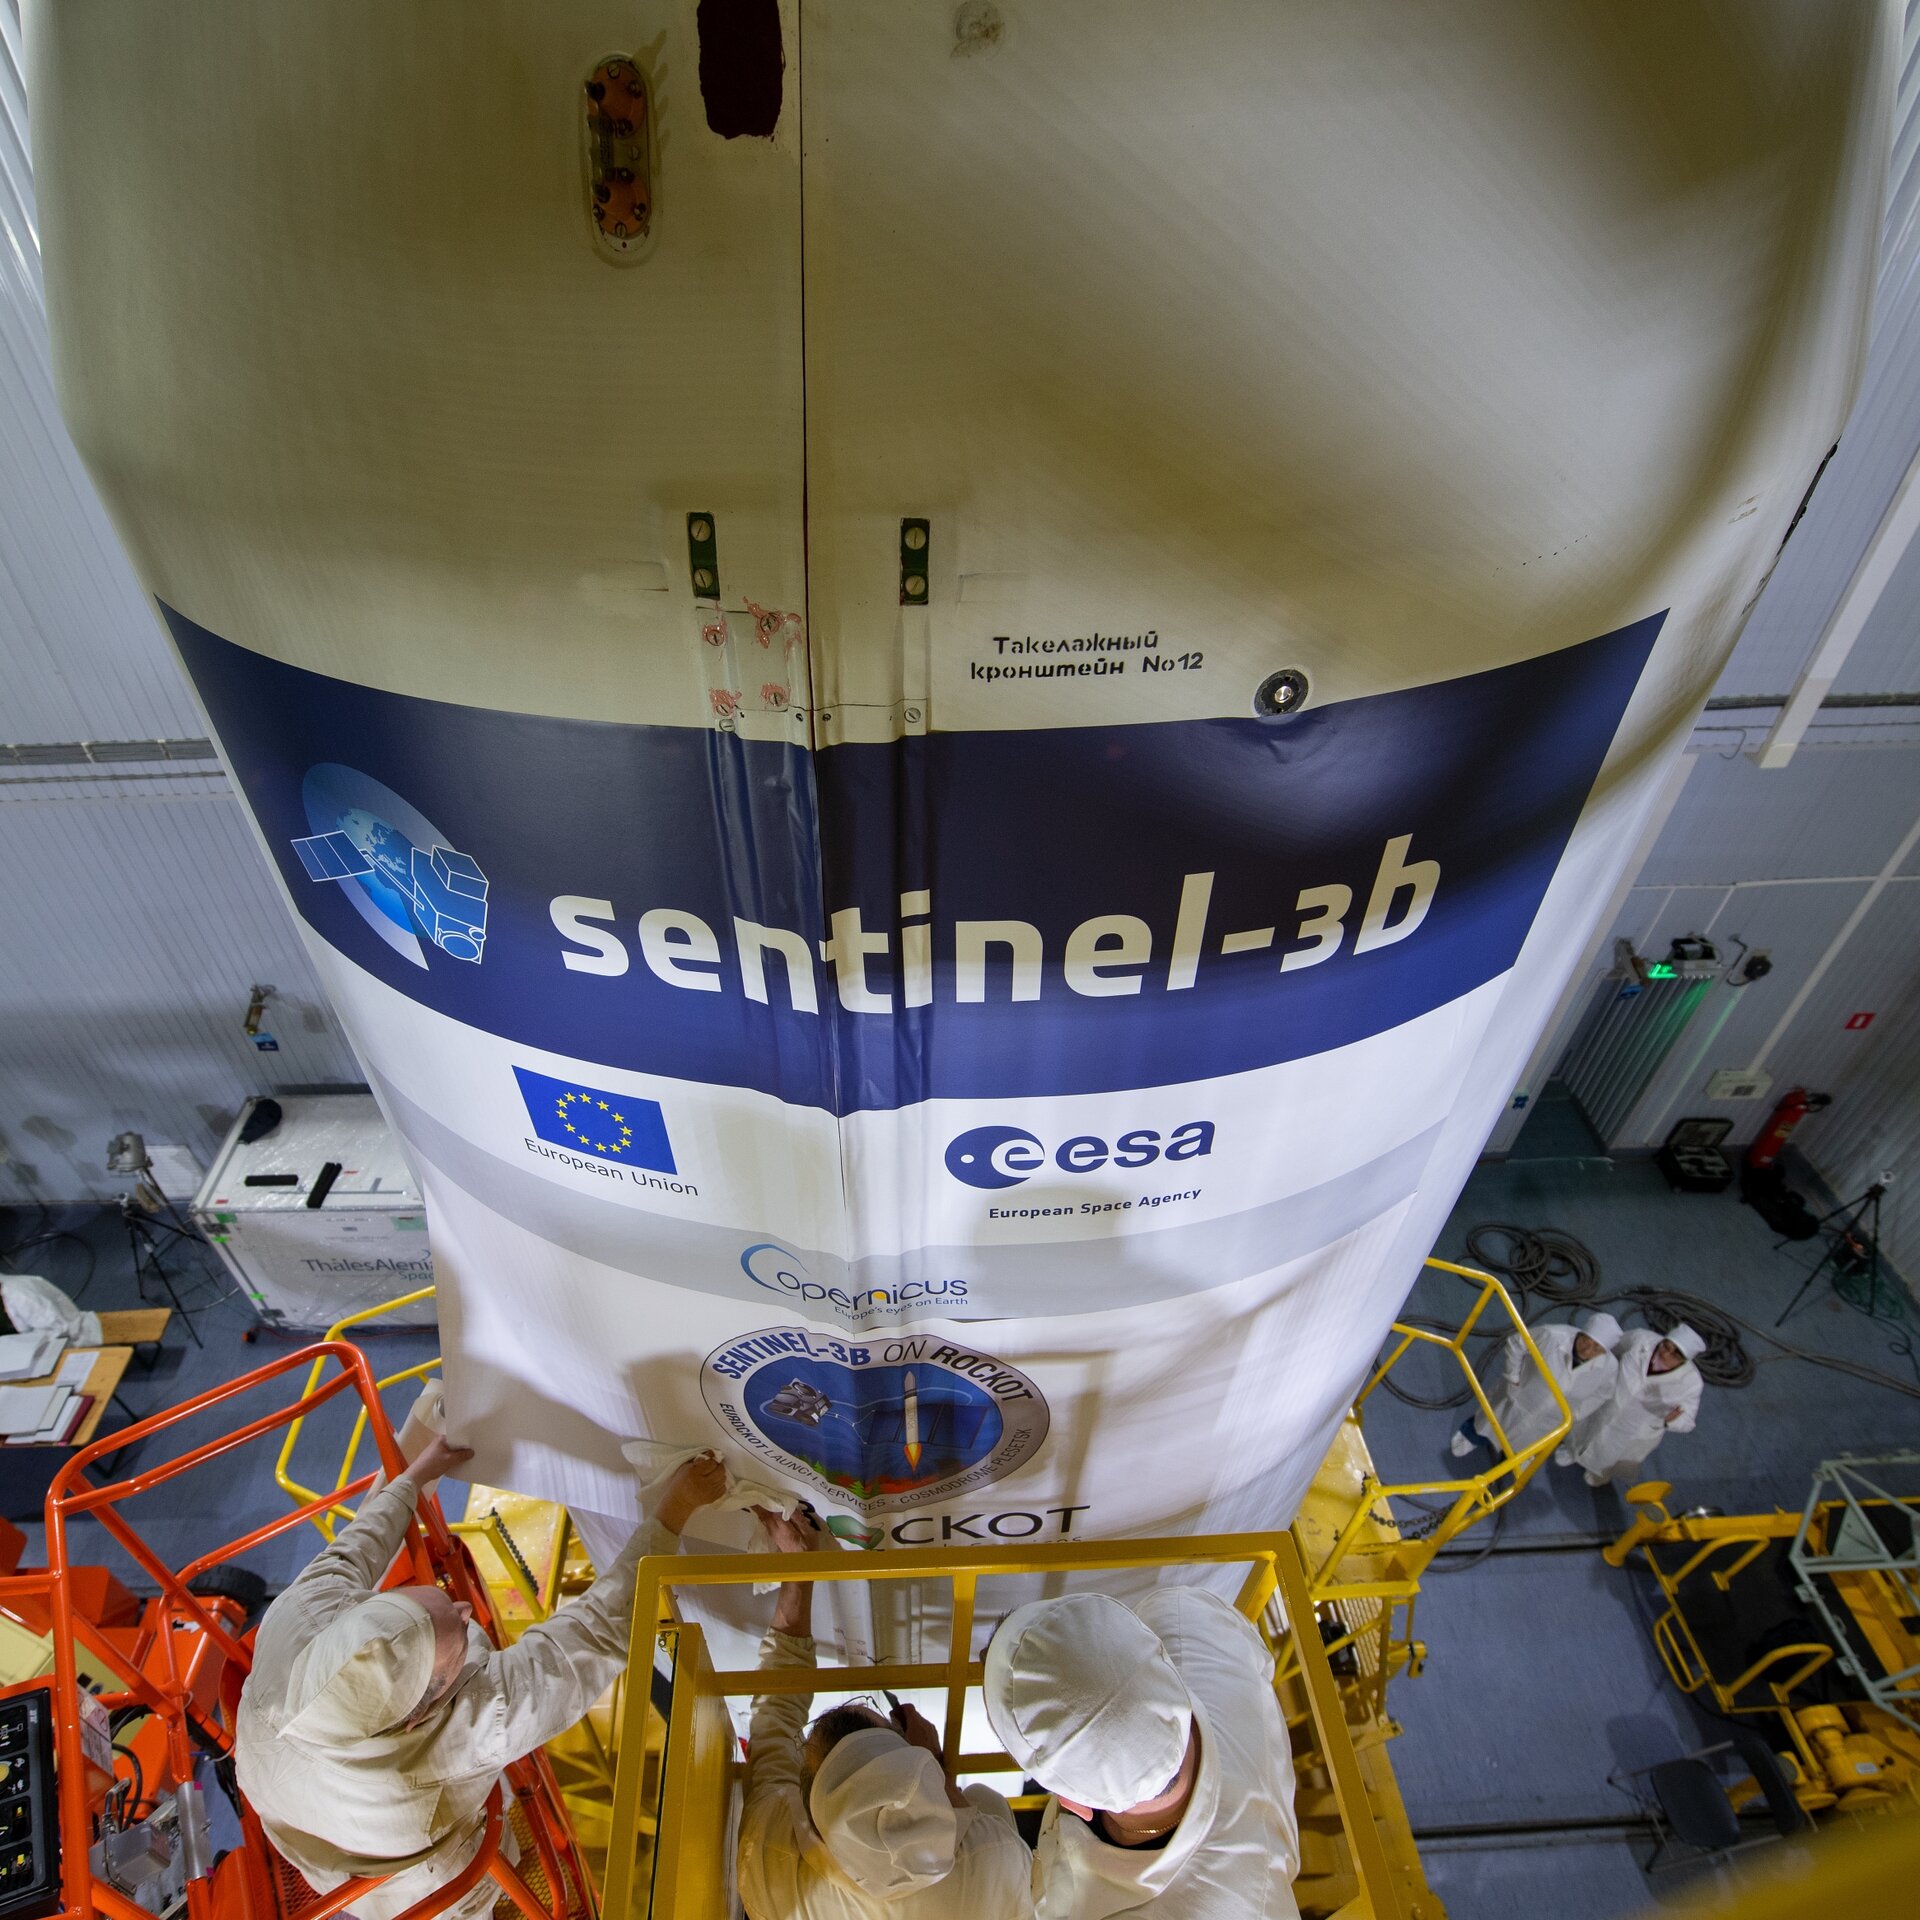 Sentinel-3B rocket fairing sticker